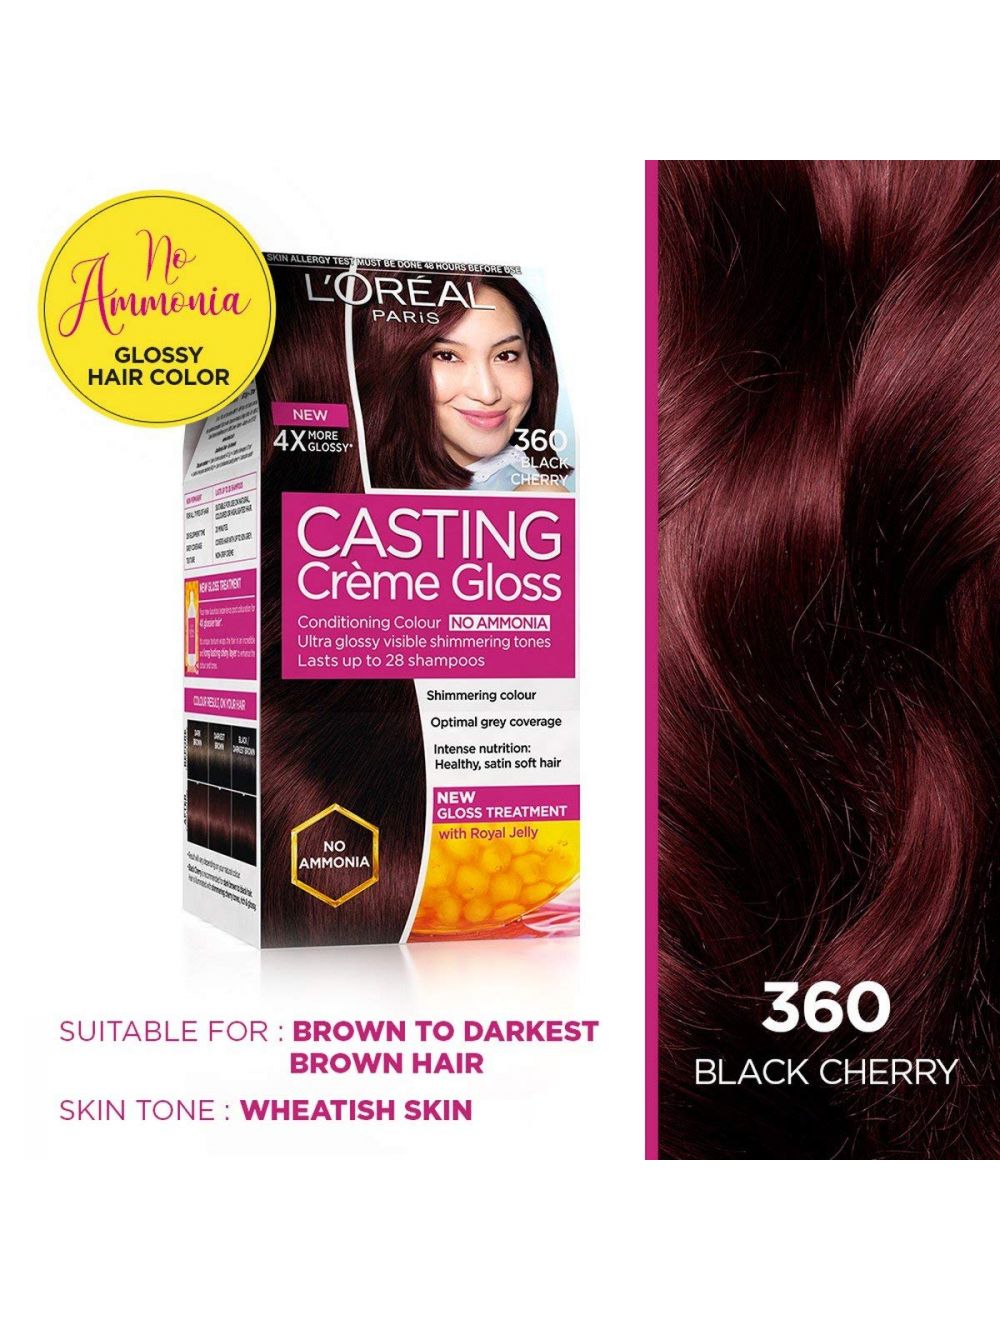 L'Oreal Paris Casting Creme Gloss Hair Color-360 Black Cherry - Niram